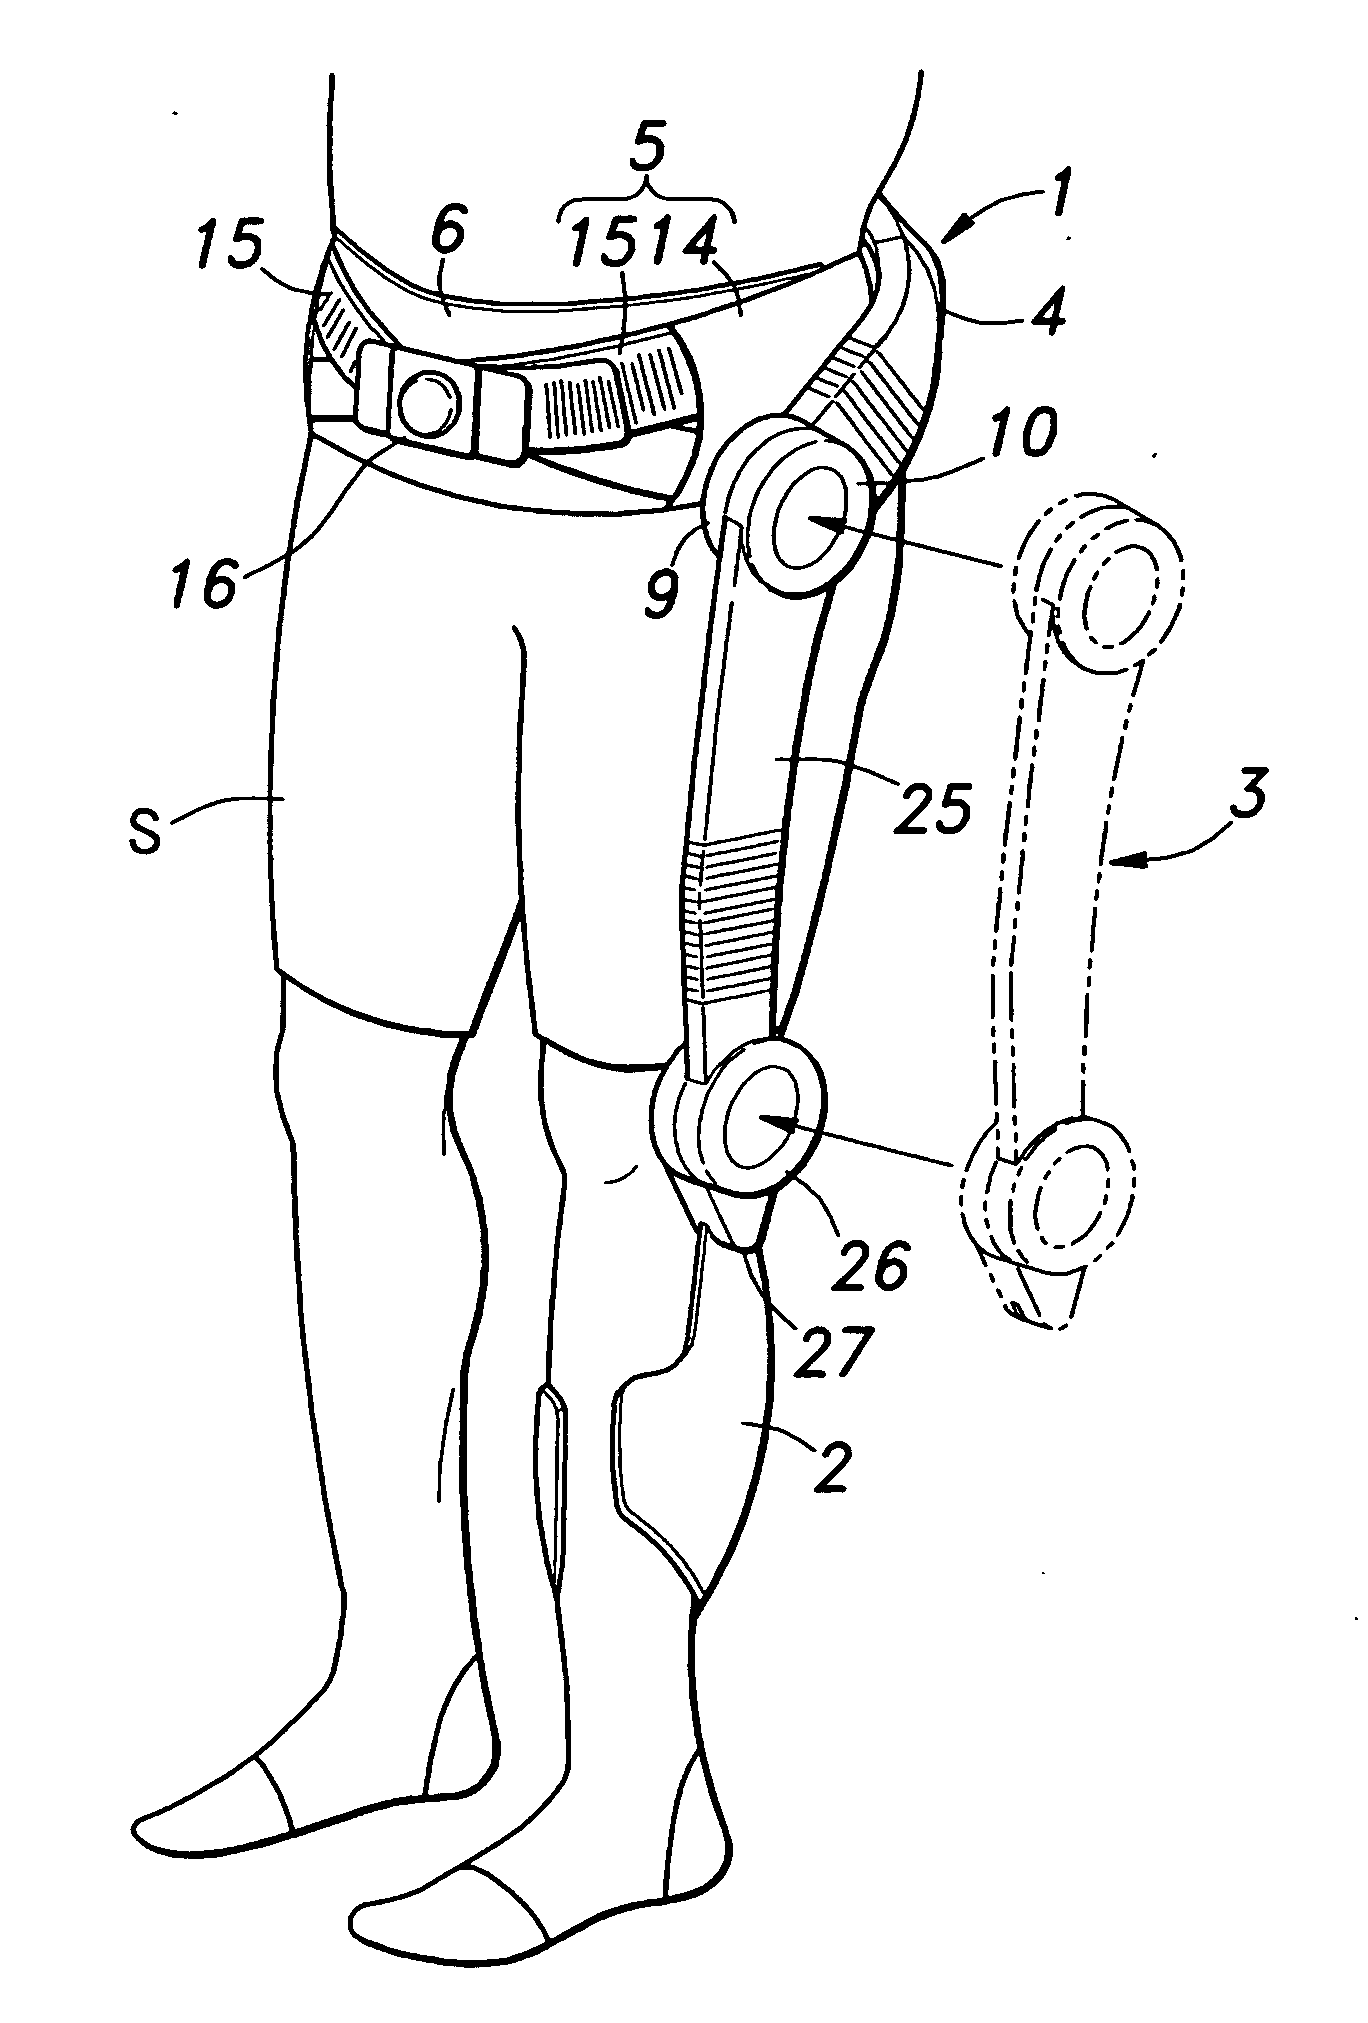 Walking assistance device